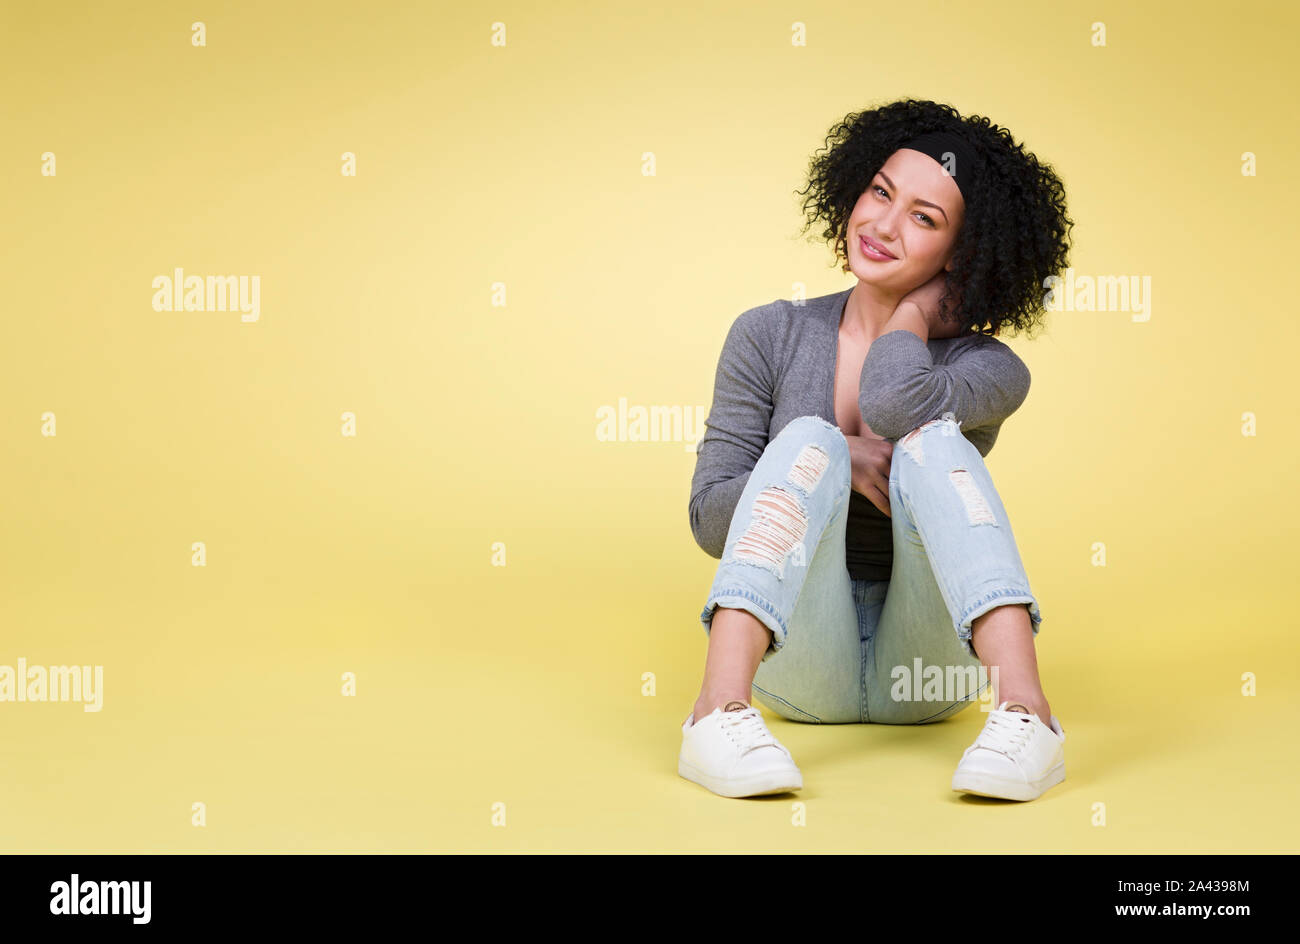 Happy woman on yellow background. Stock Photo